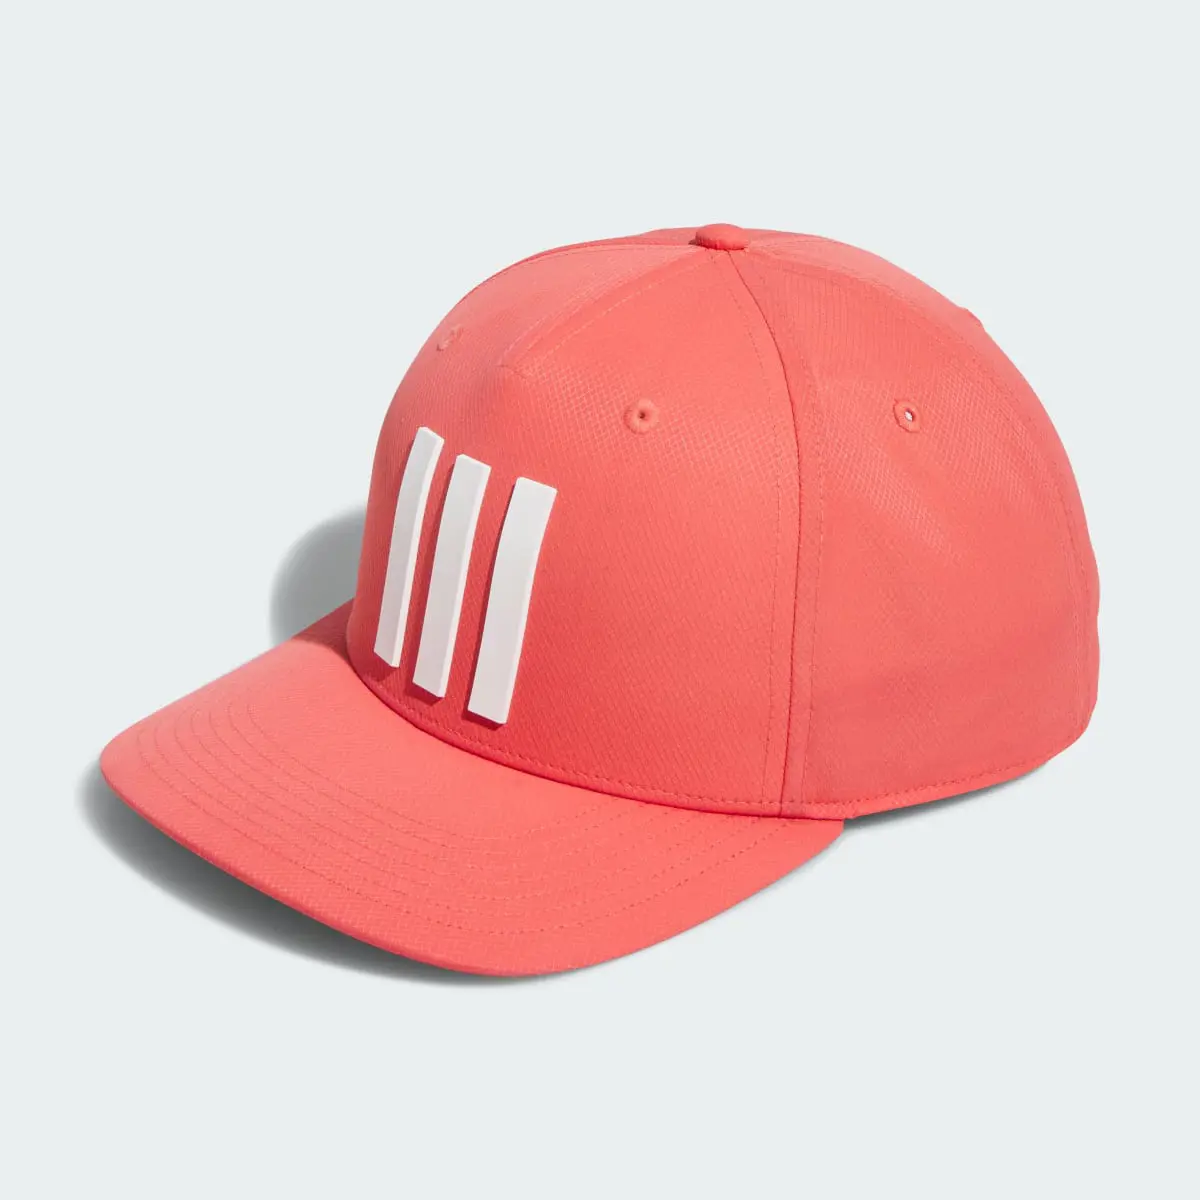 Adidas 3-Stripes Tour Hat. 2